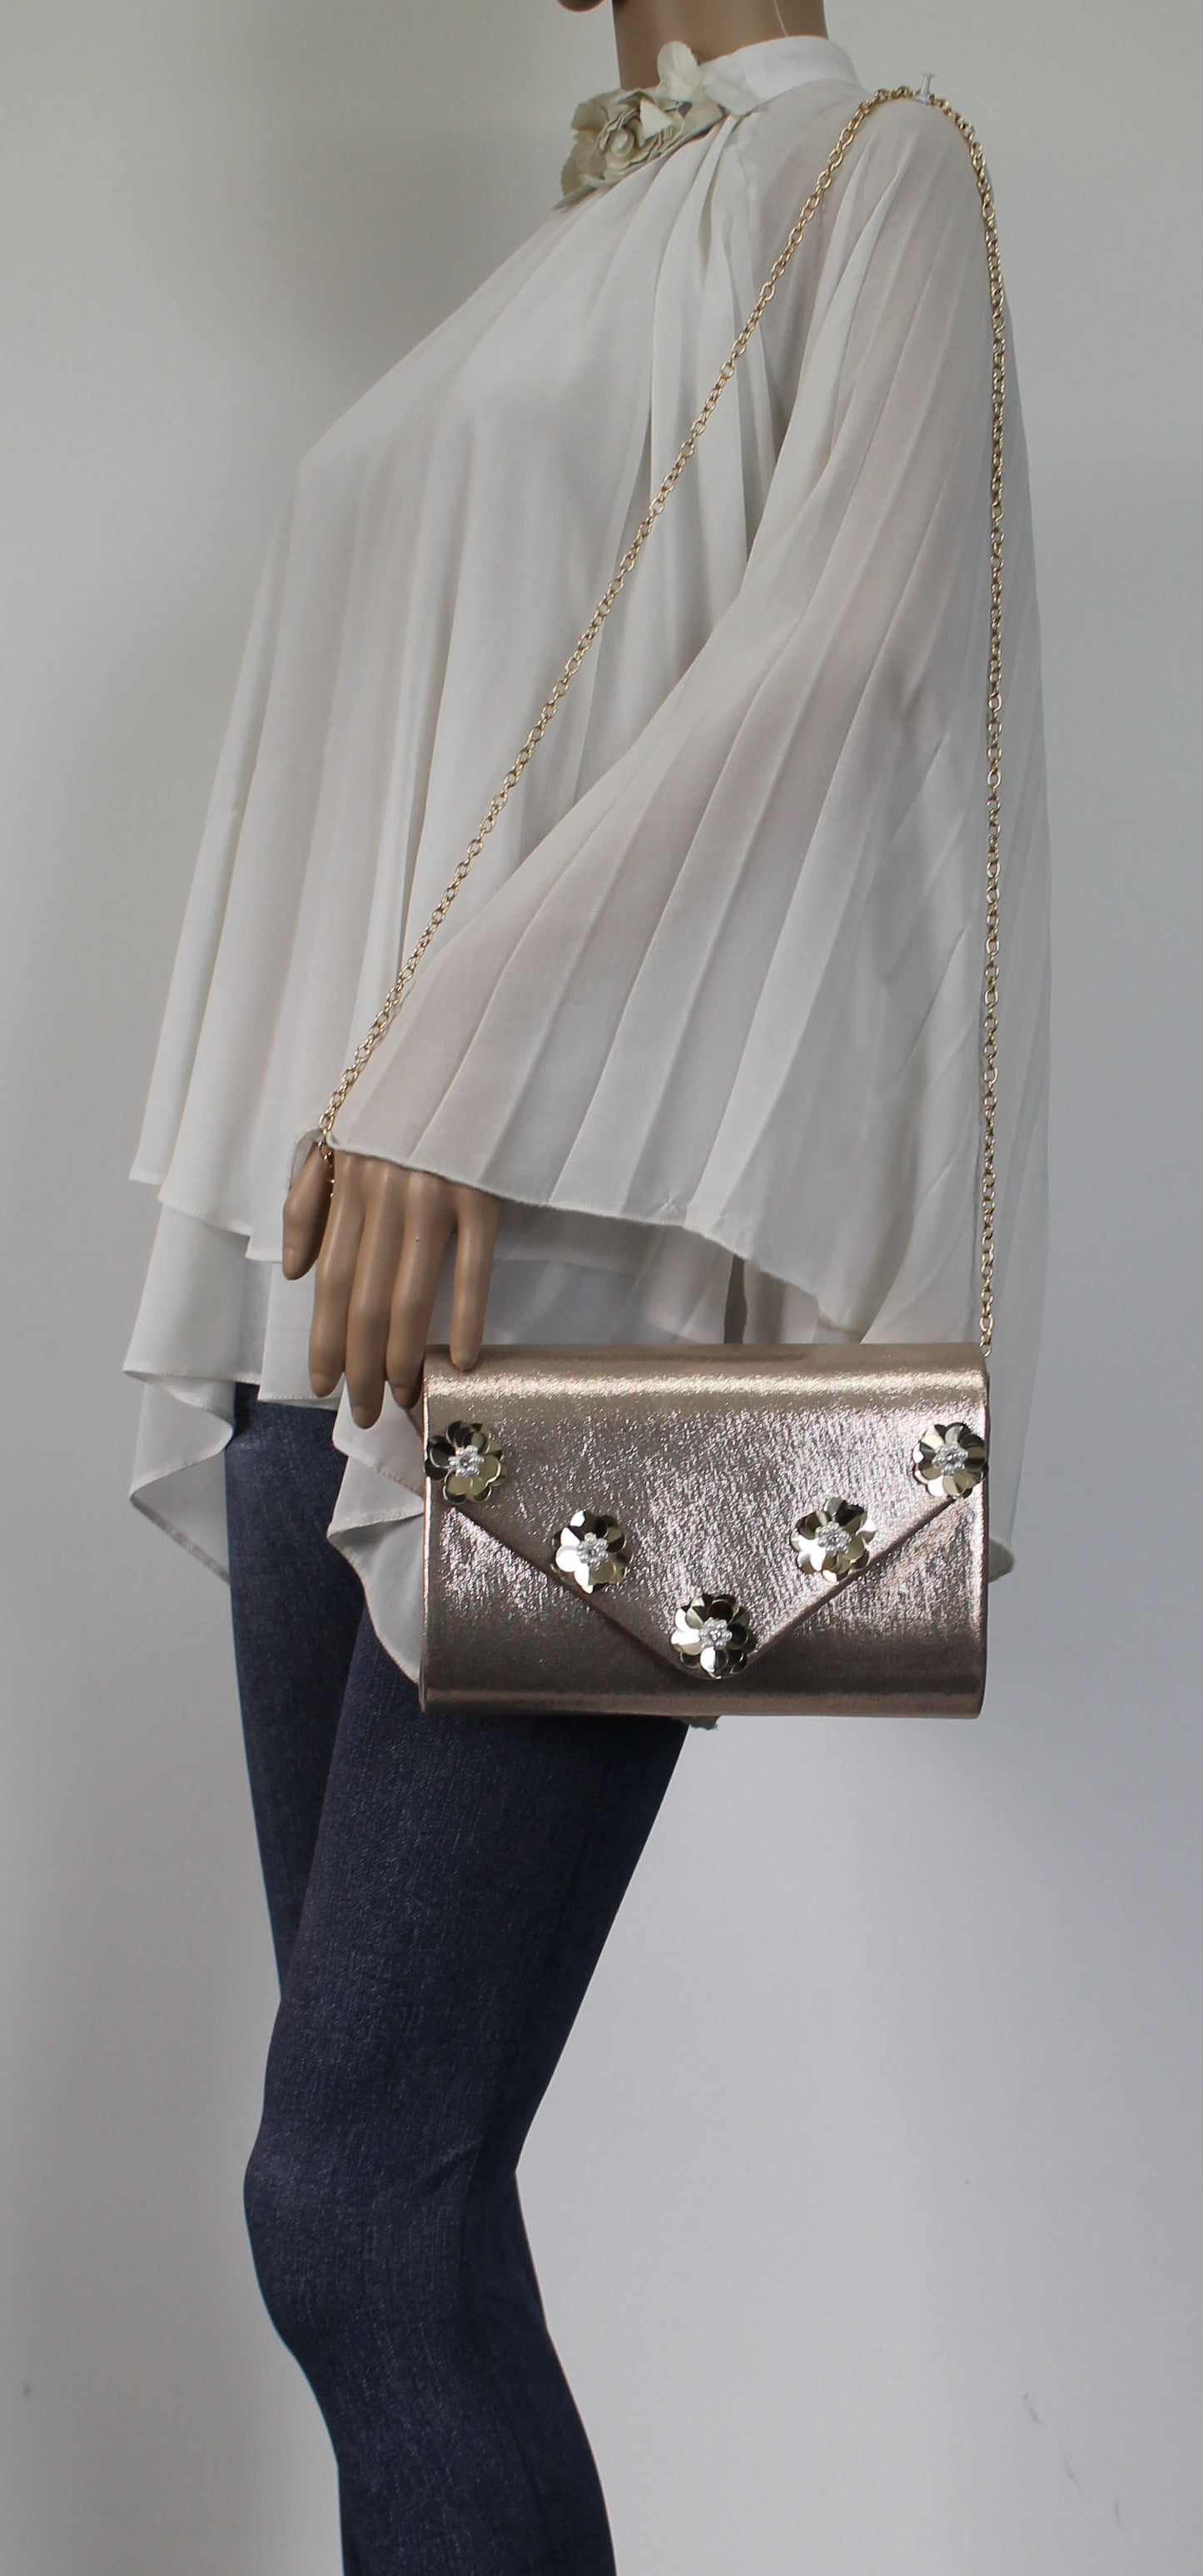 SWANKYSWANS Josie Clutch Bag Gold Cute Cheap Clutch Bag For Weddings School and Work